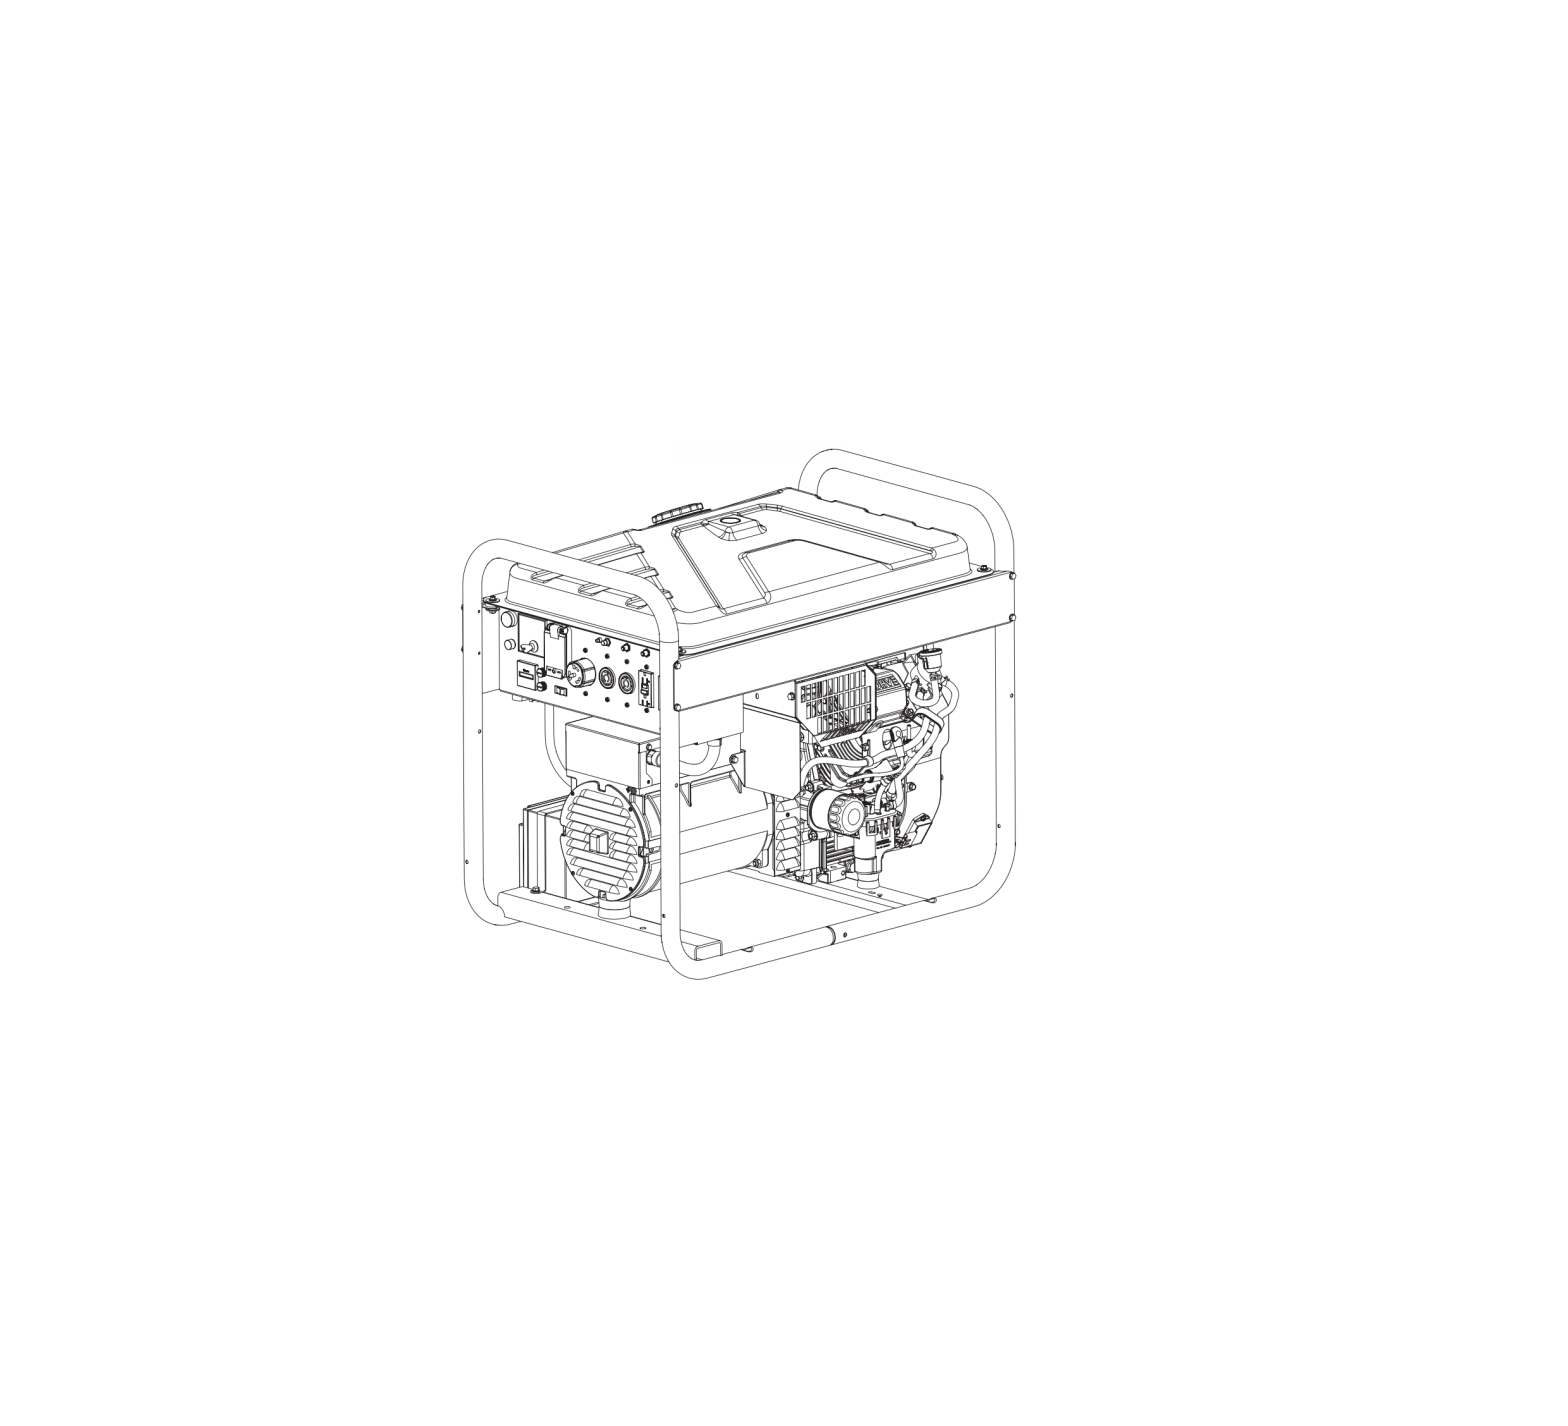 KOHLER PRO 12.3 EFI Portable Generator Owner’s Manual